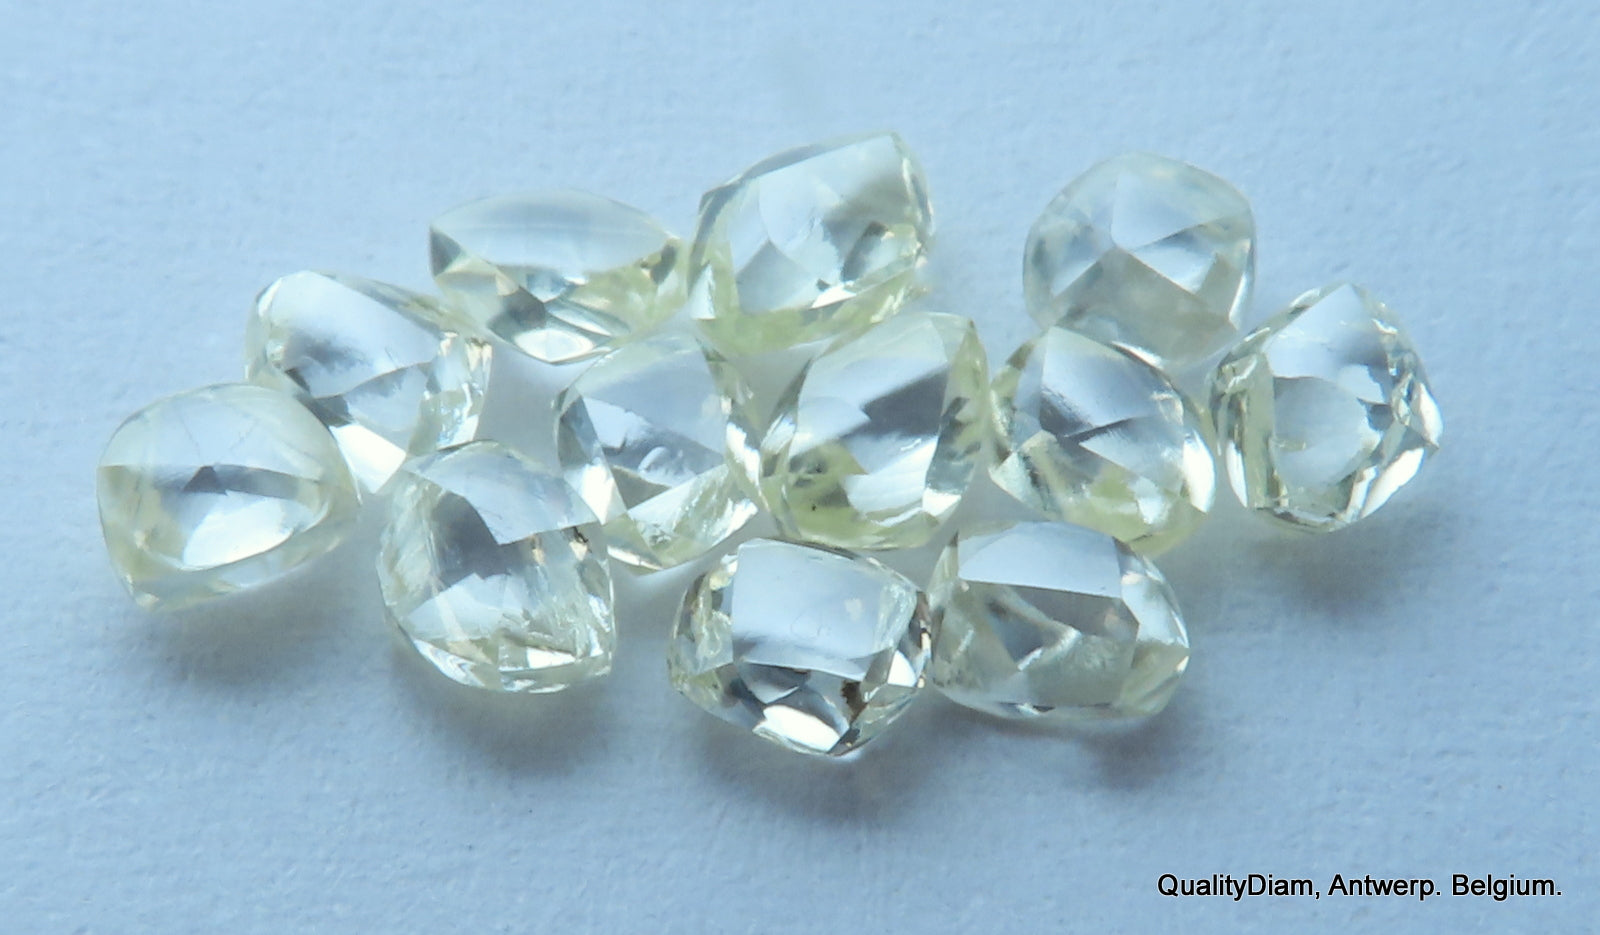 3.01 carat diamonds out from diamond mines